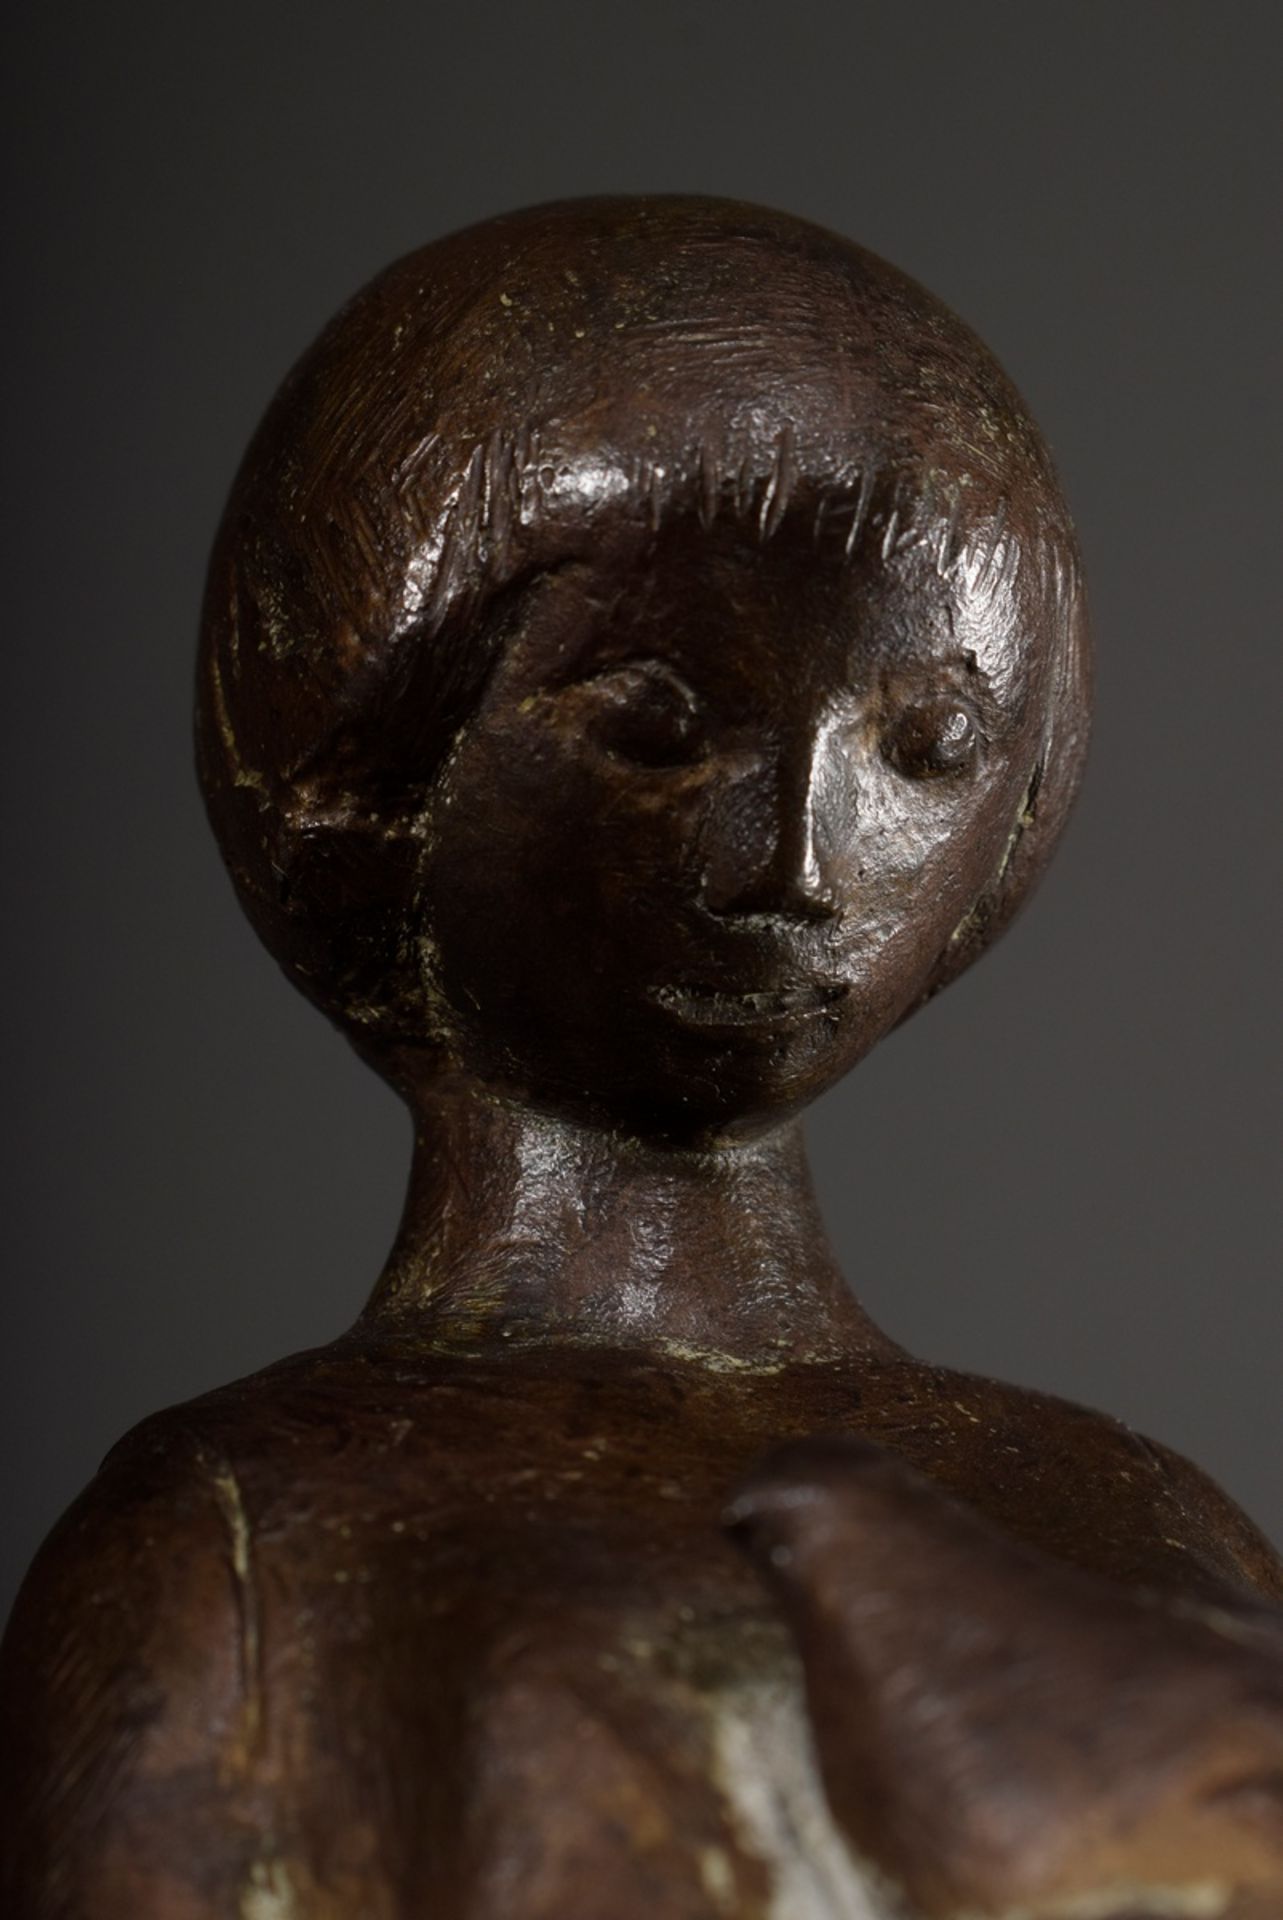 Pfab, Joern (1925-1986) "Little dove girl" 1957, bronze, 3 ex, cast Barth/Elmenhorst, WVZ No. 49, h - Image 4 of 8